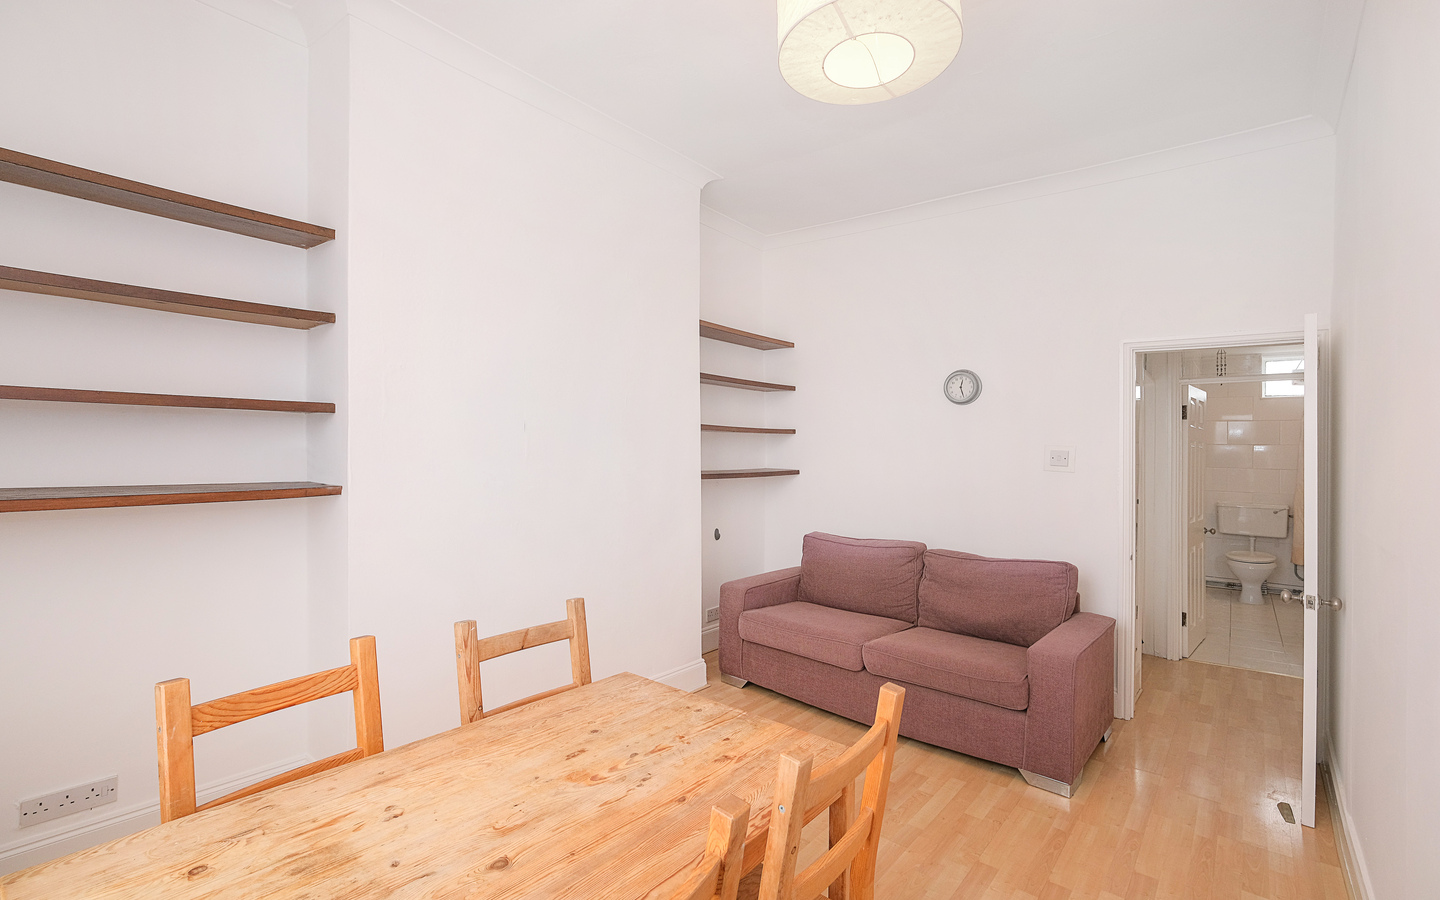 1 Bedroom Flat For Rent - London - Hackney - 10B E9 5AH